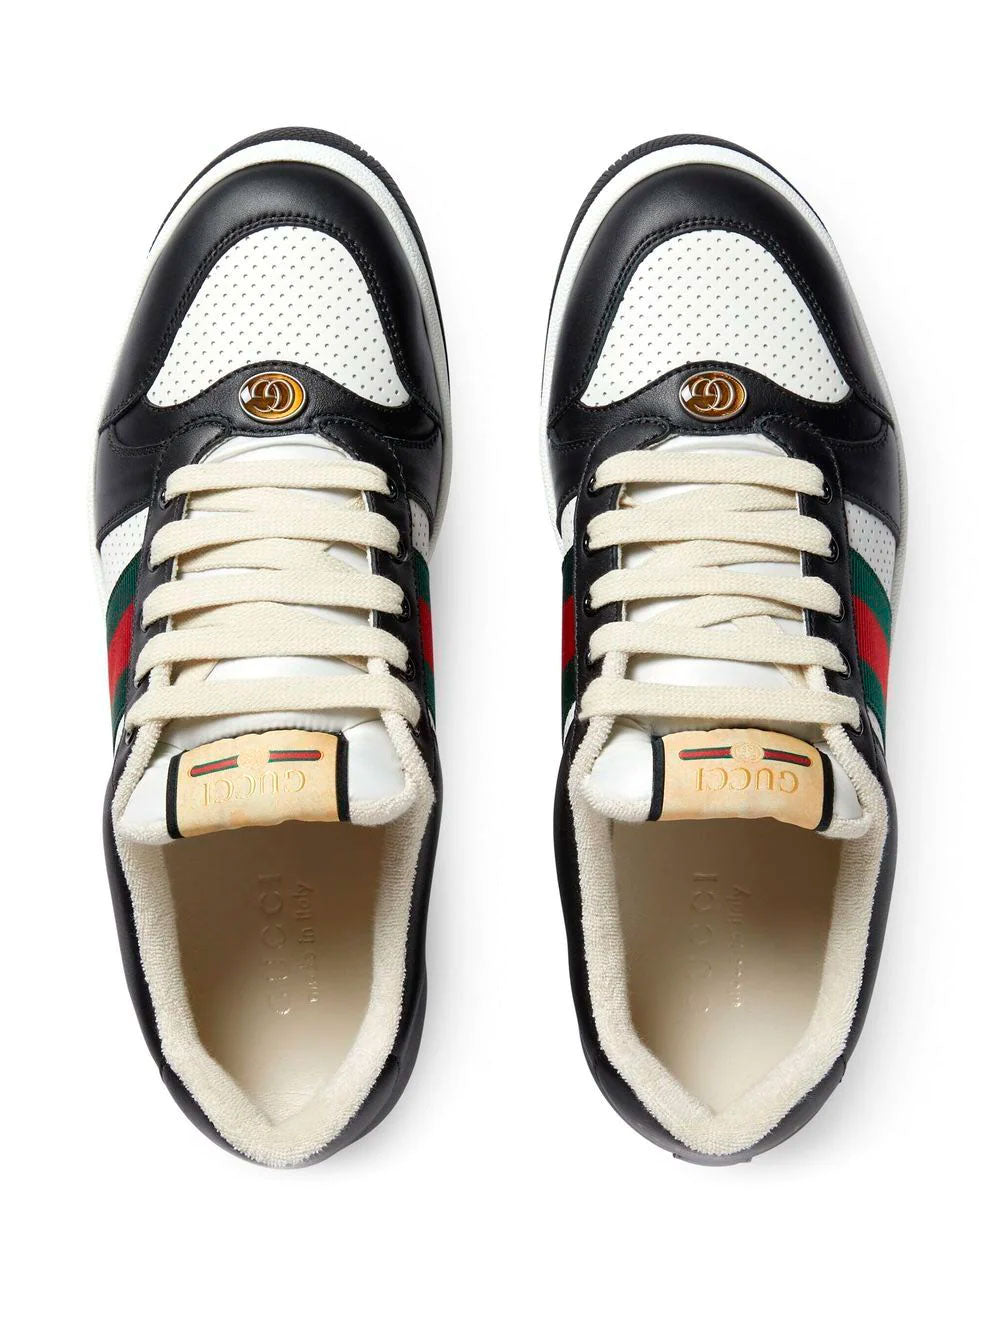 Sneakers Screener Gucci negro y blanco